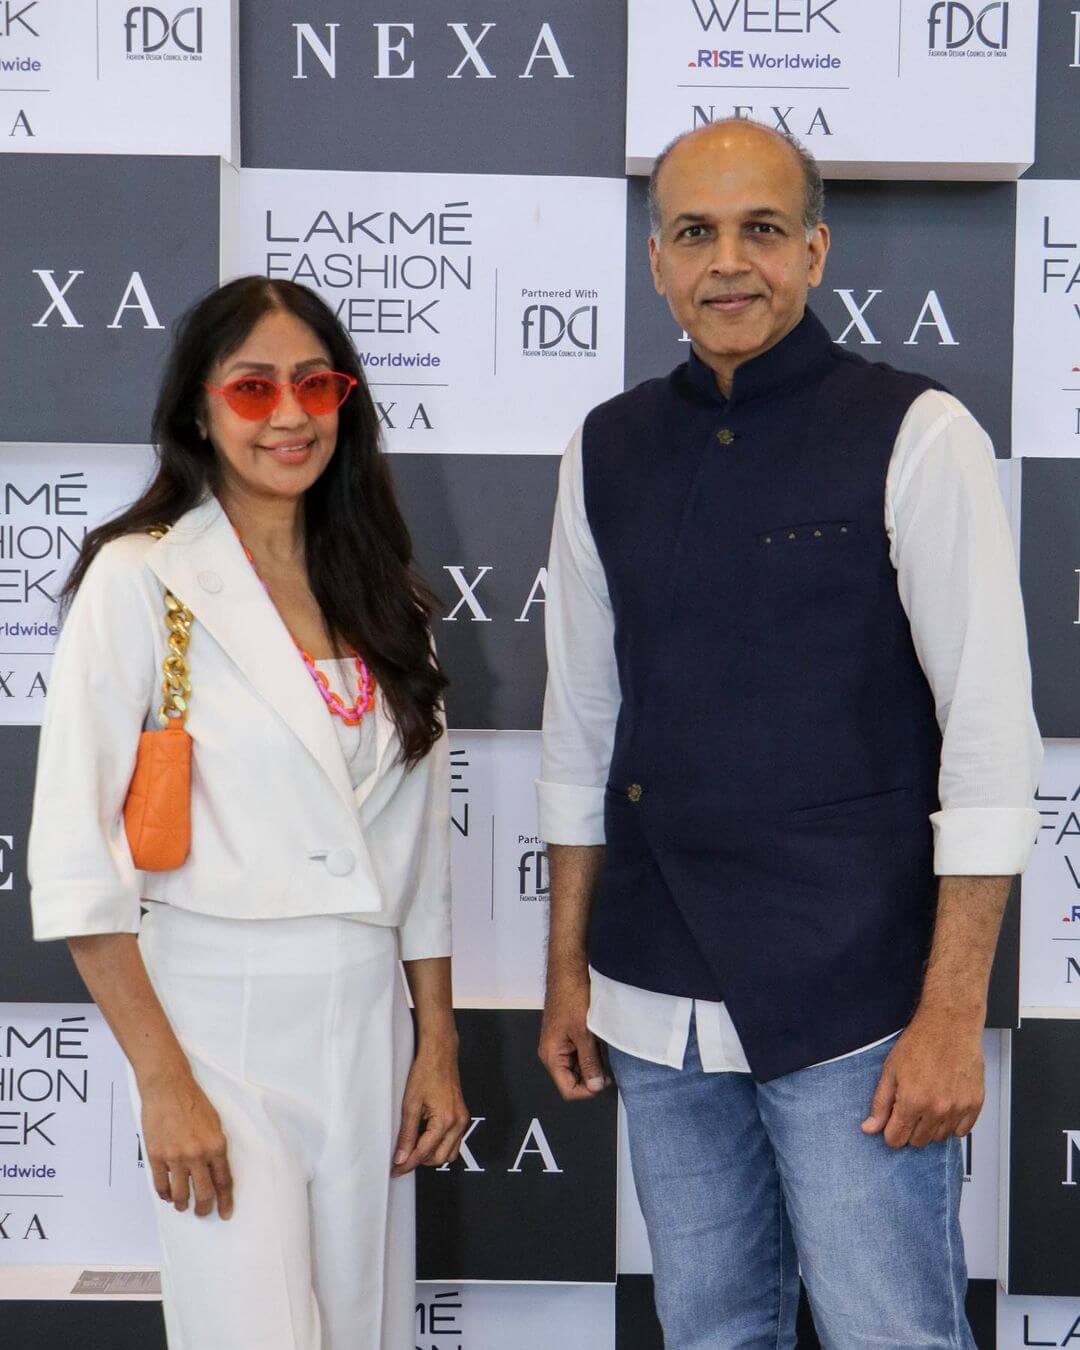 Lakme Fashion Week Bollywood Celebrities Spotted At The Runway - Ashutosh Gowarikar Attends Lakme Fashion Show With His Wife Sunita Gowariker